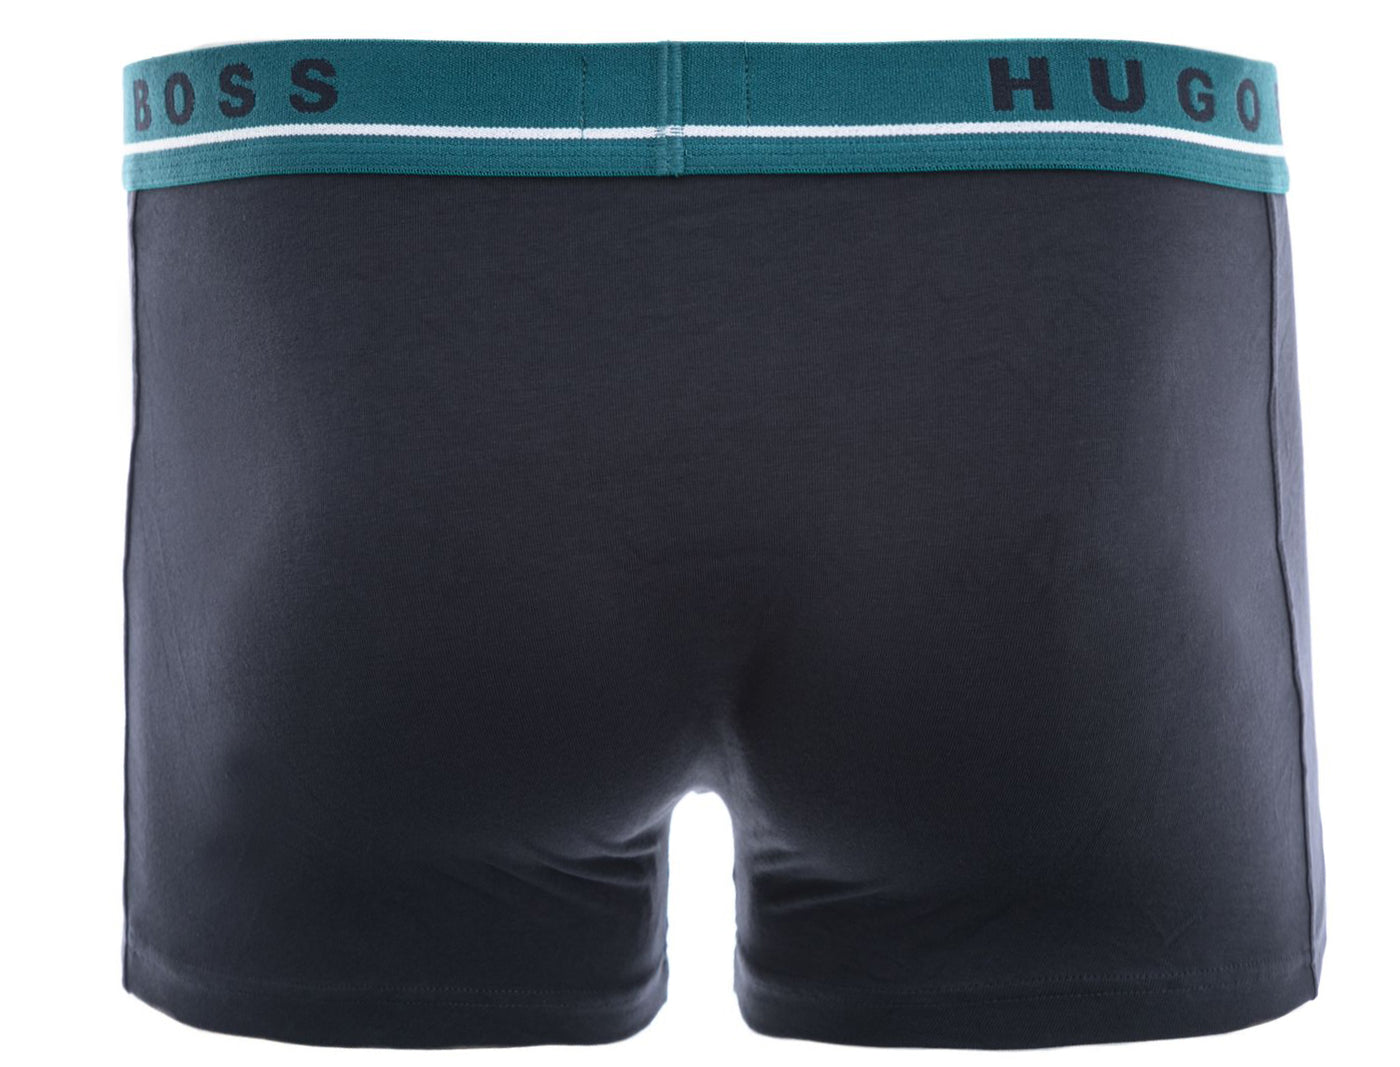 BOSS Trunk 3 Pack Underwear in Orange, Navy & Green